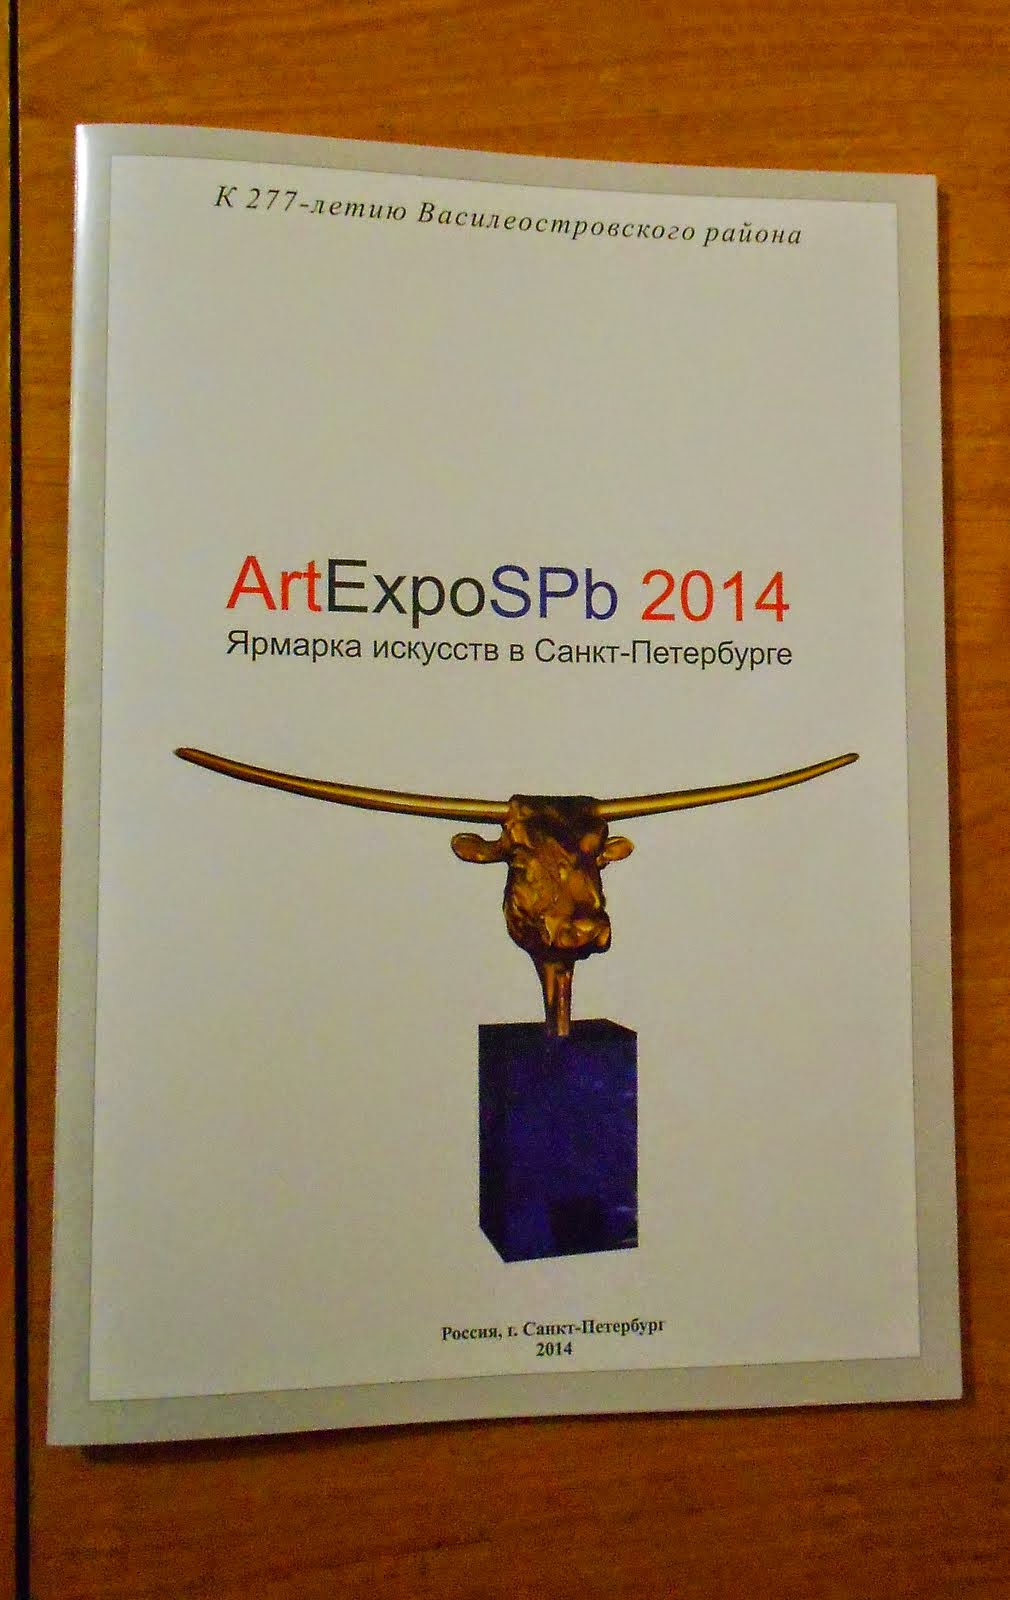 ART Expo SPB 2014